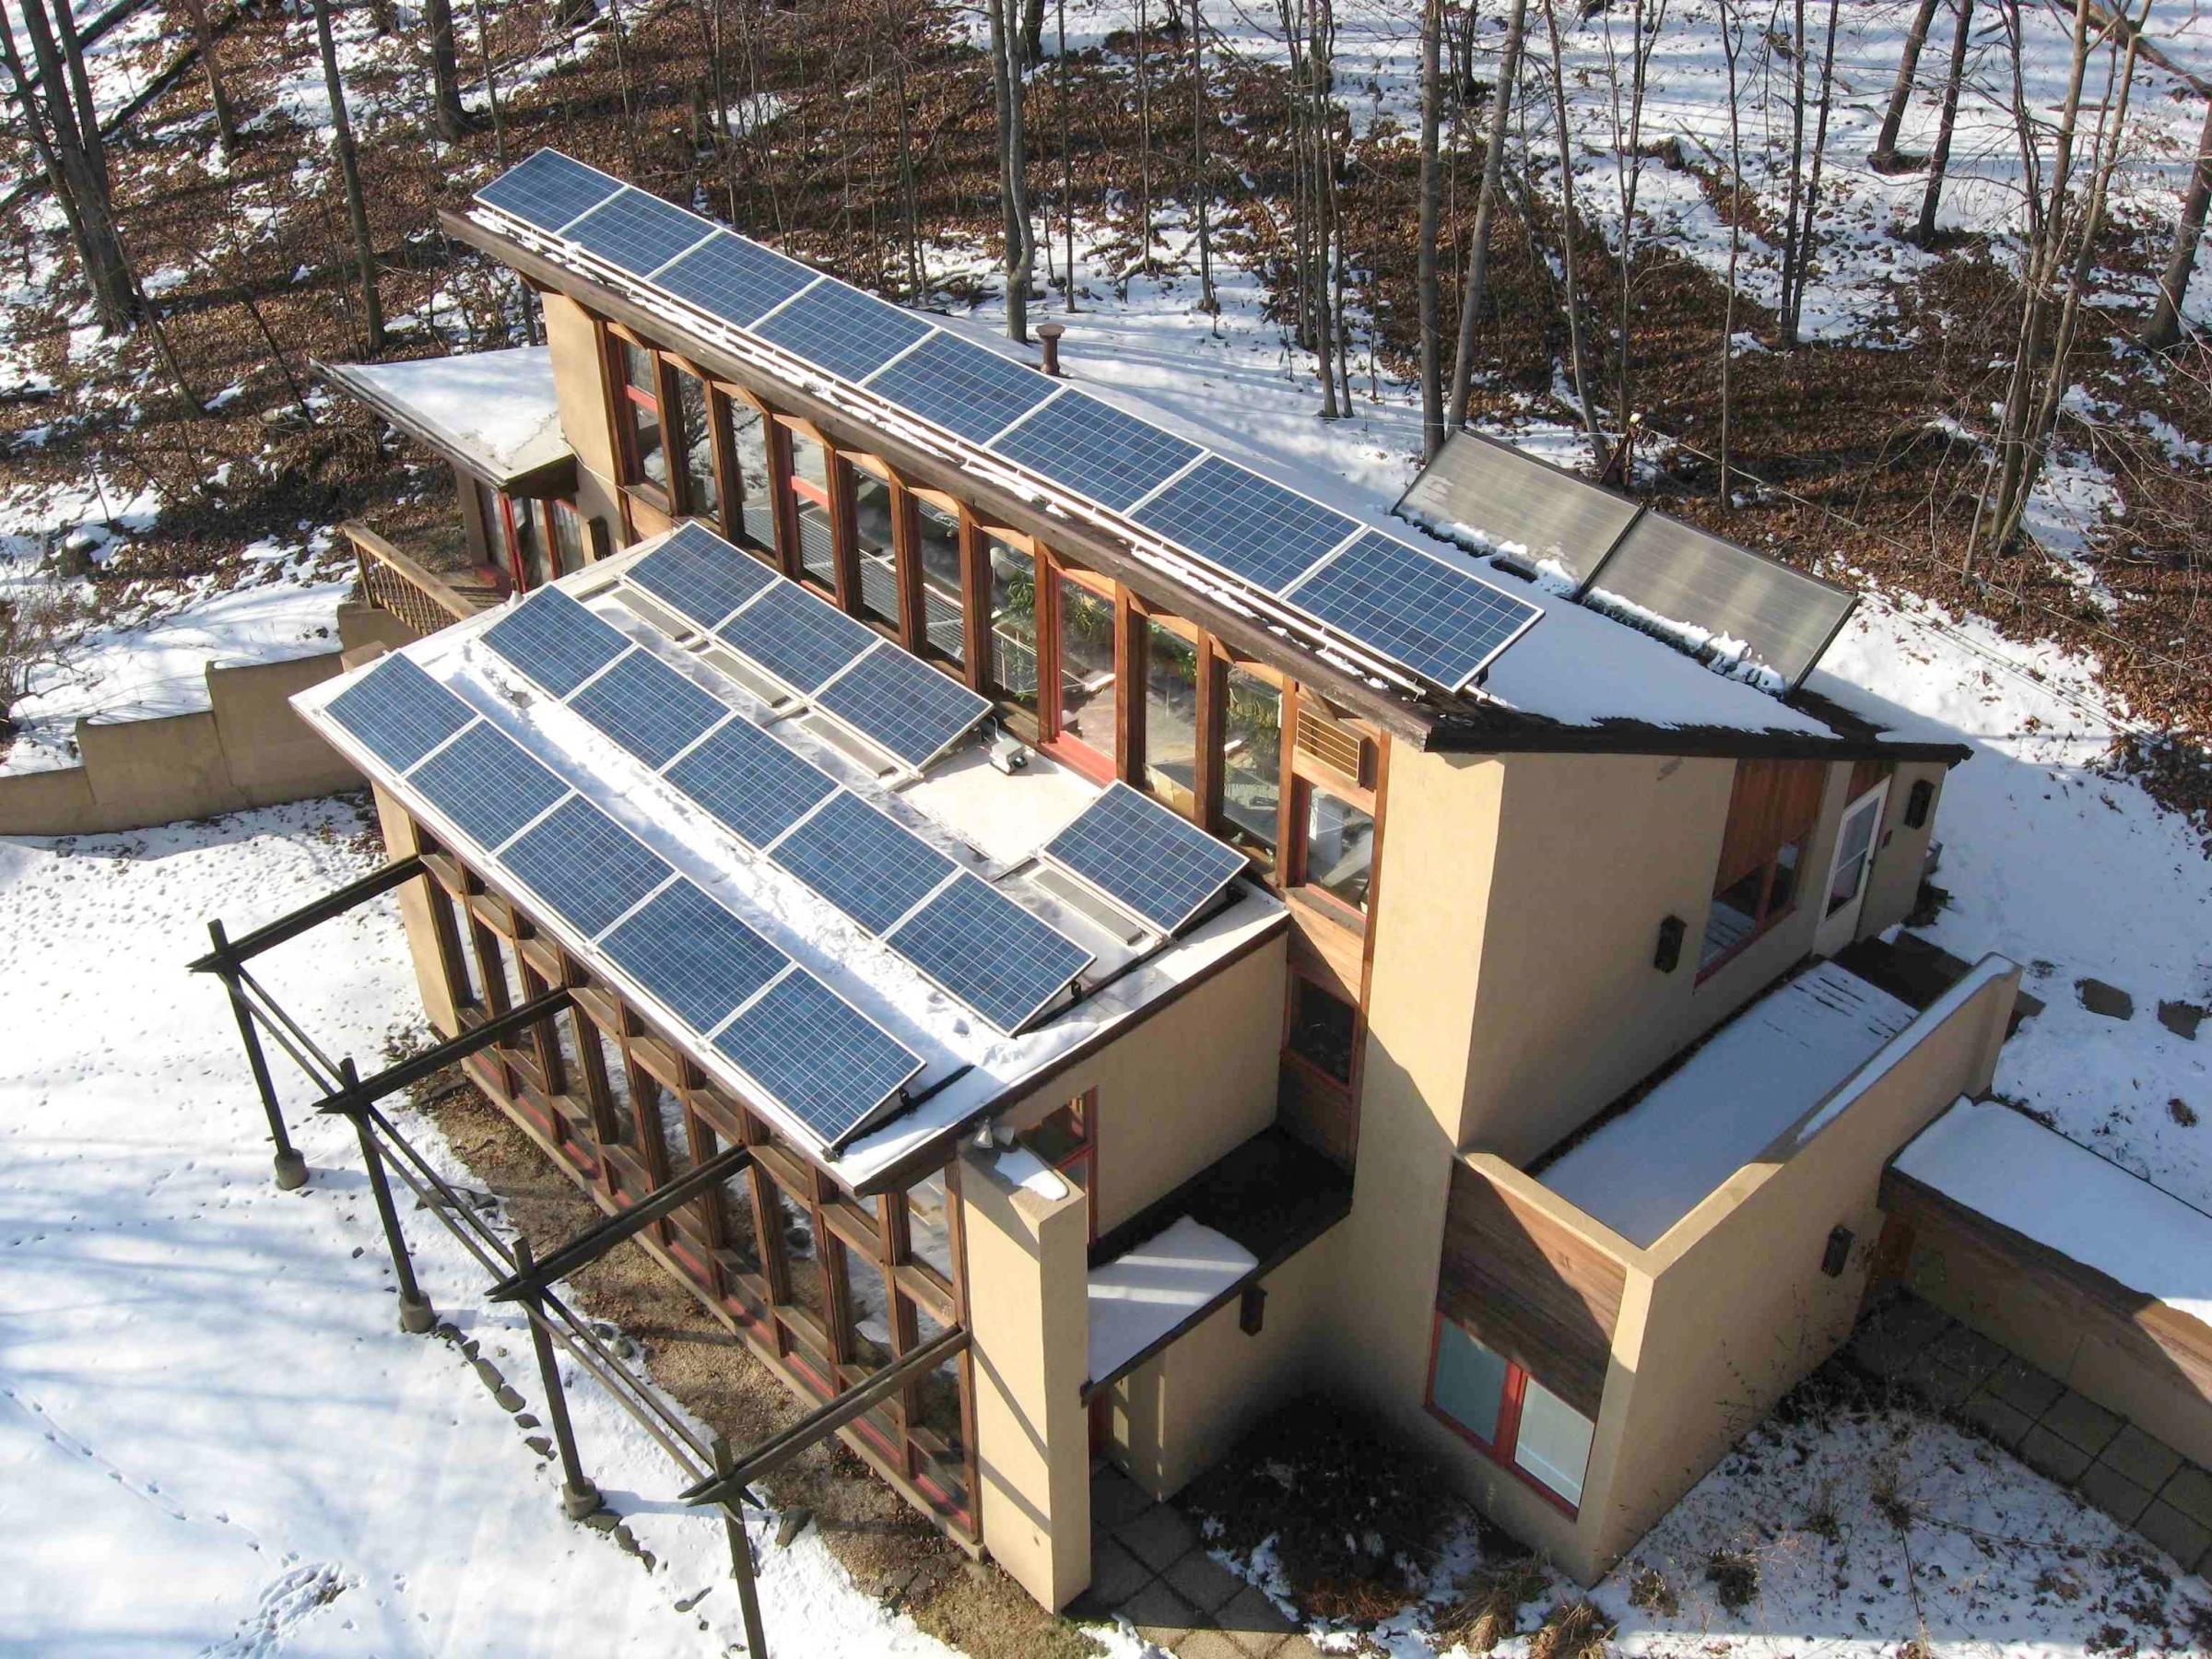 Alan's Passive Solar Home